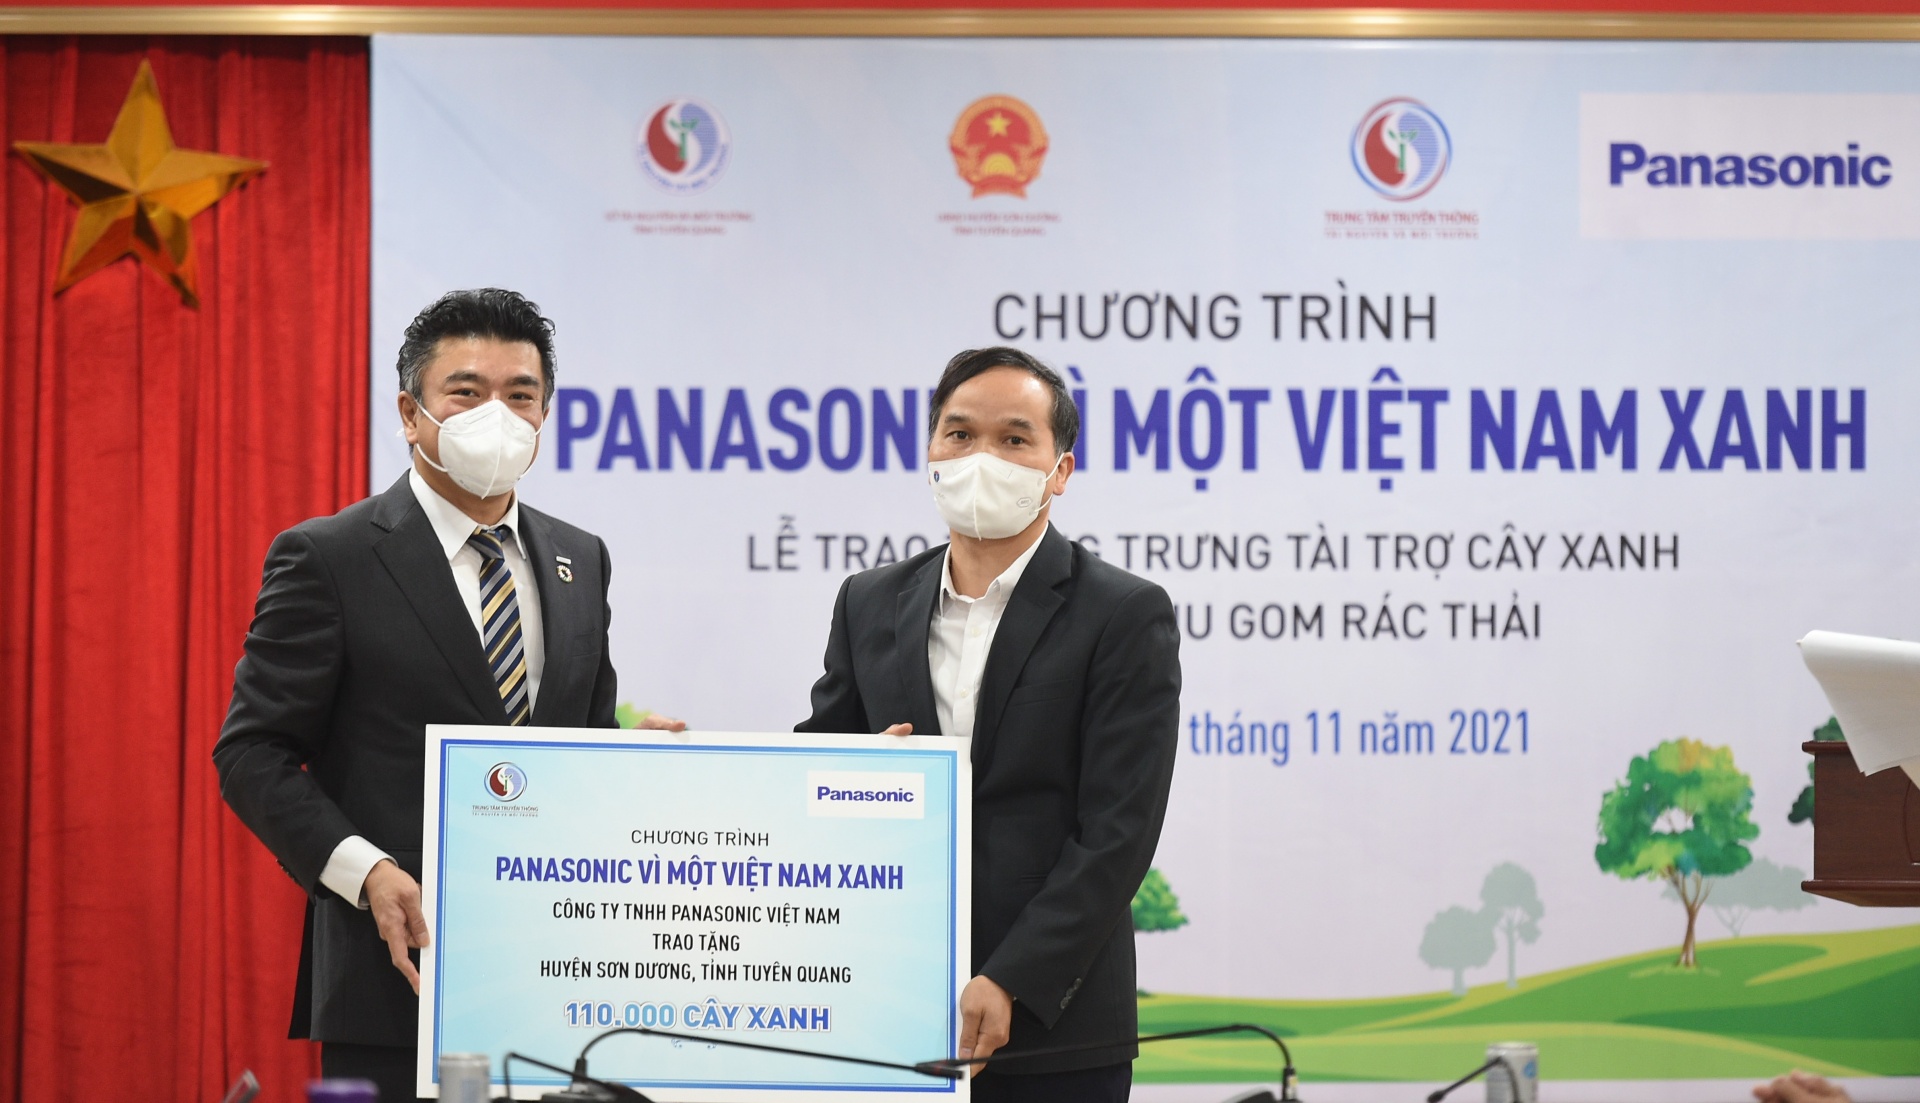 Panasonic continues journey for a green Vietnam despite Covid-19